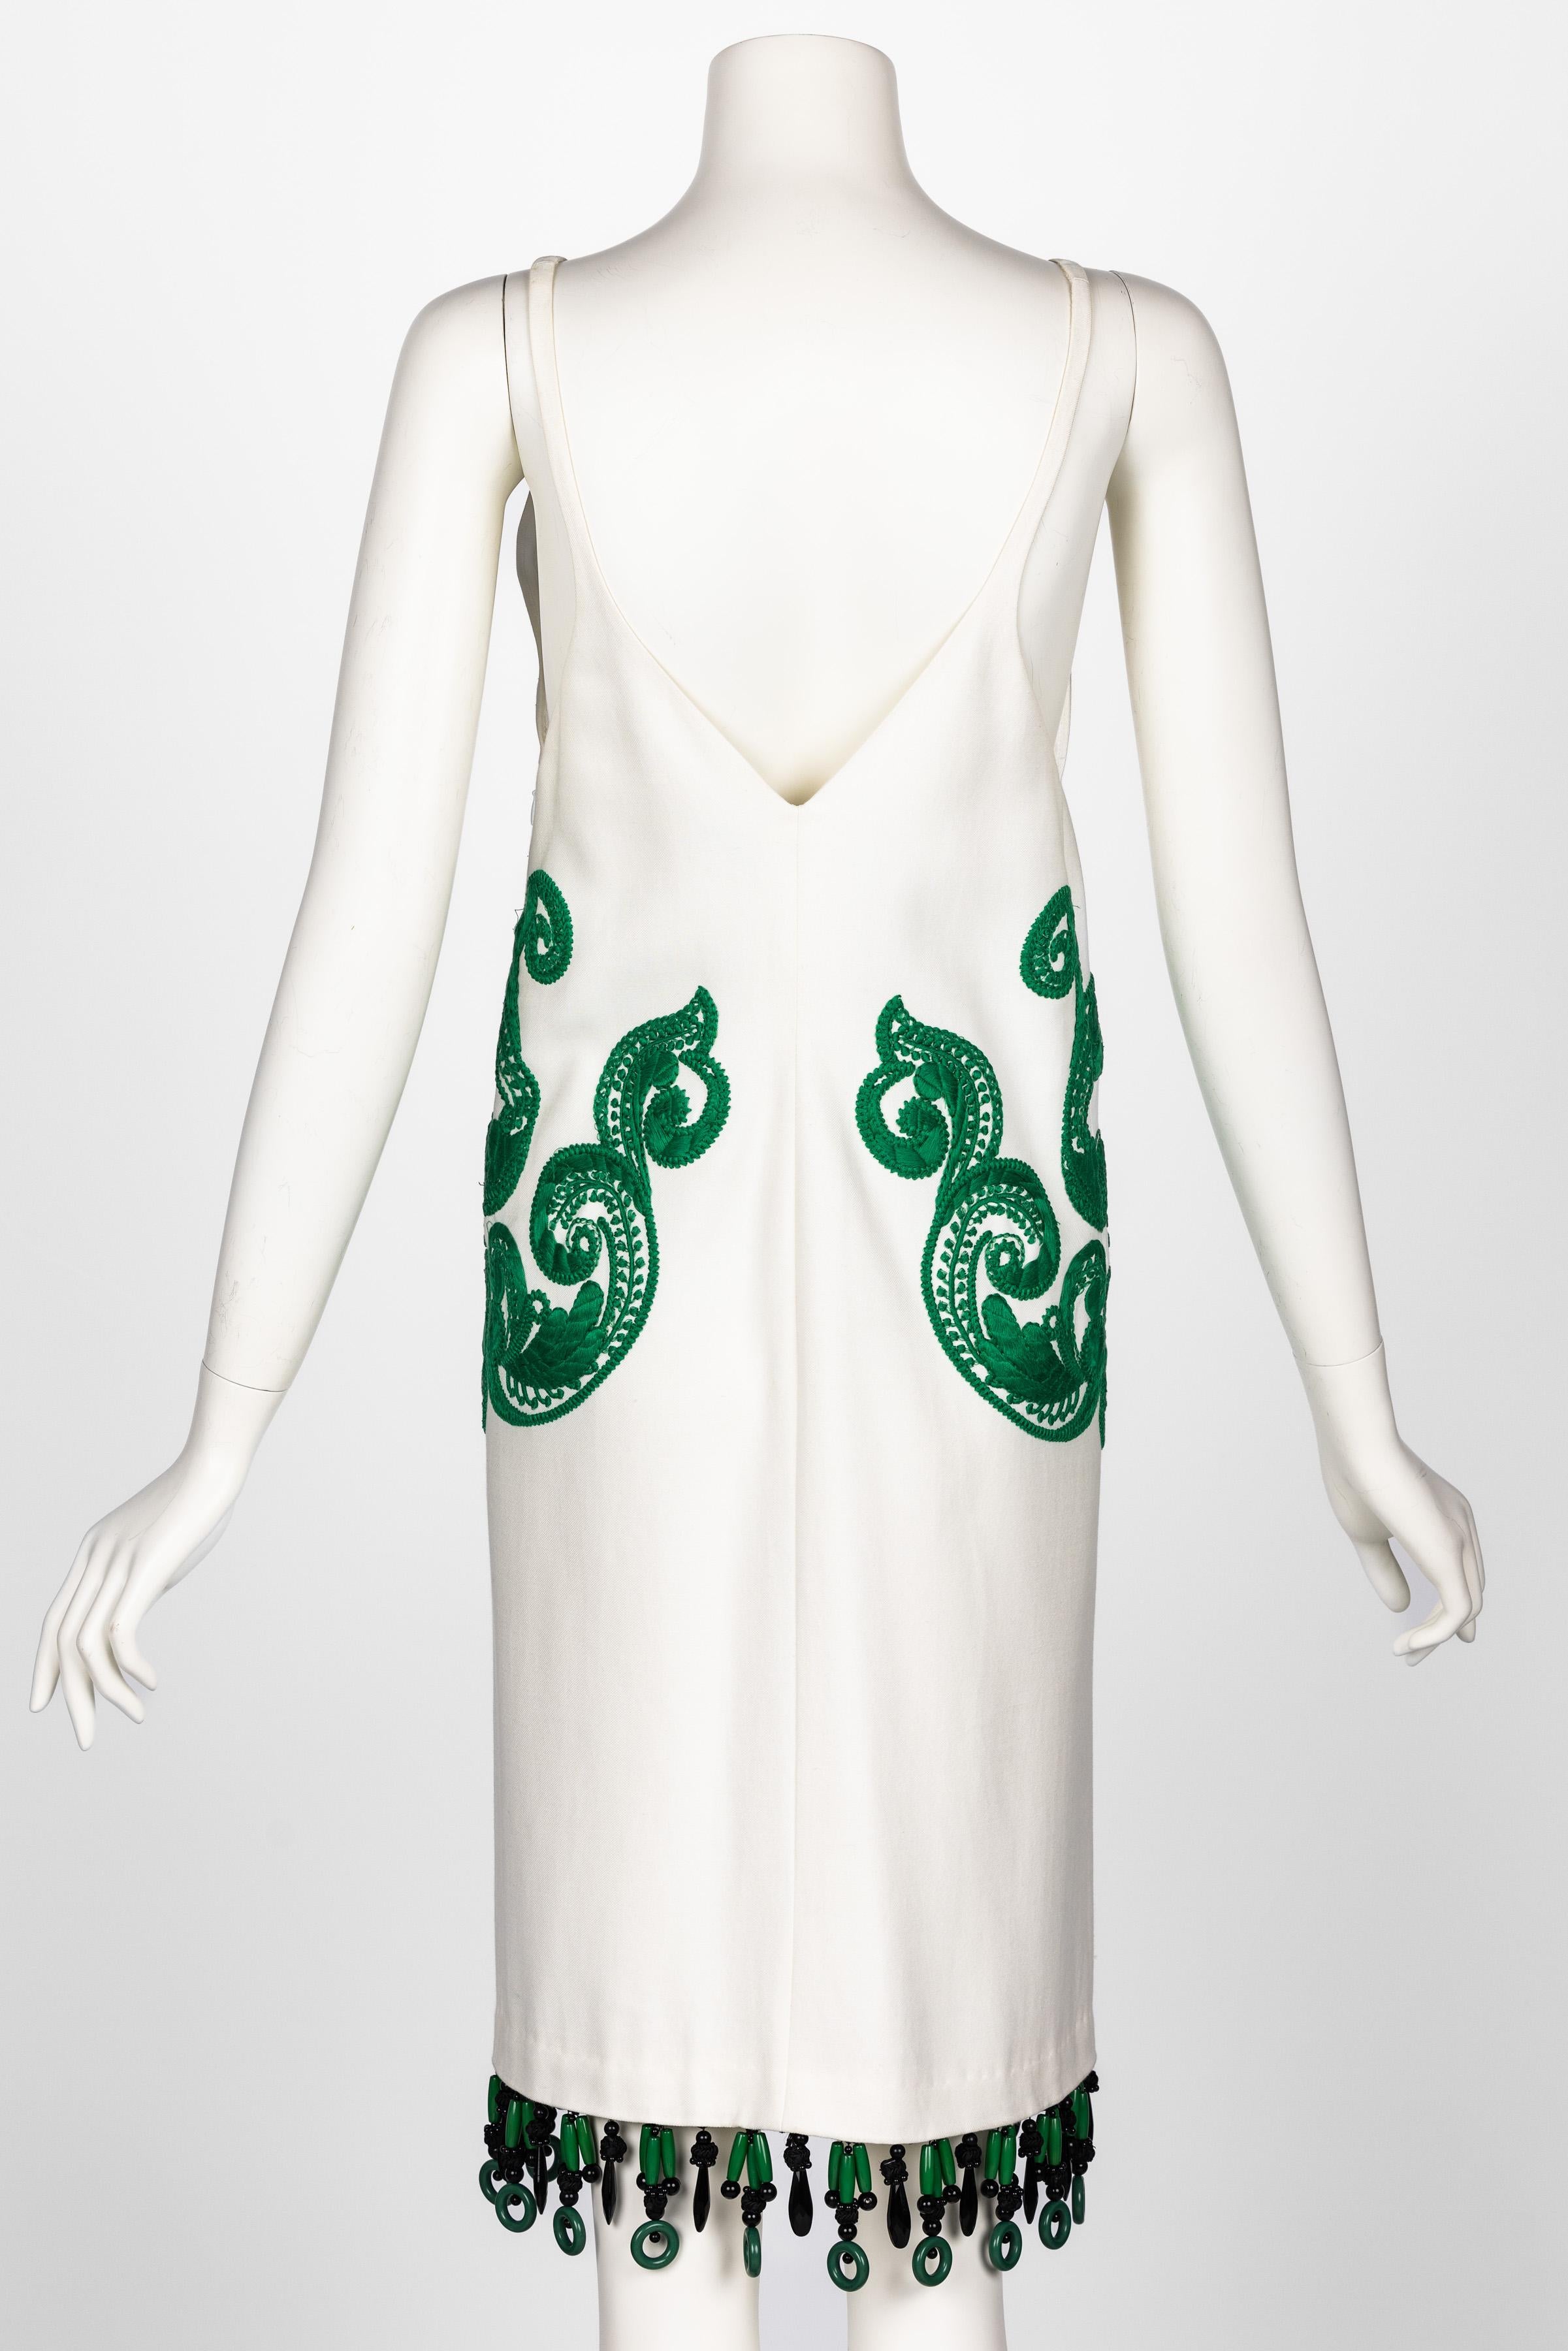 Women's Prada S/S 2011 Runway Look #28 Embroidered Beaded Modern Flapper Dress